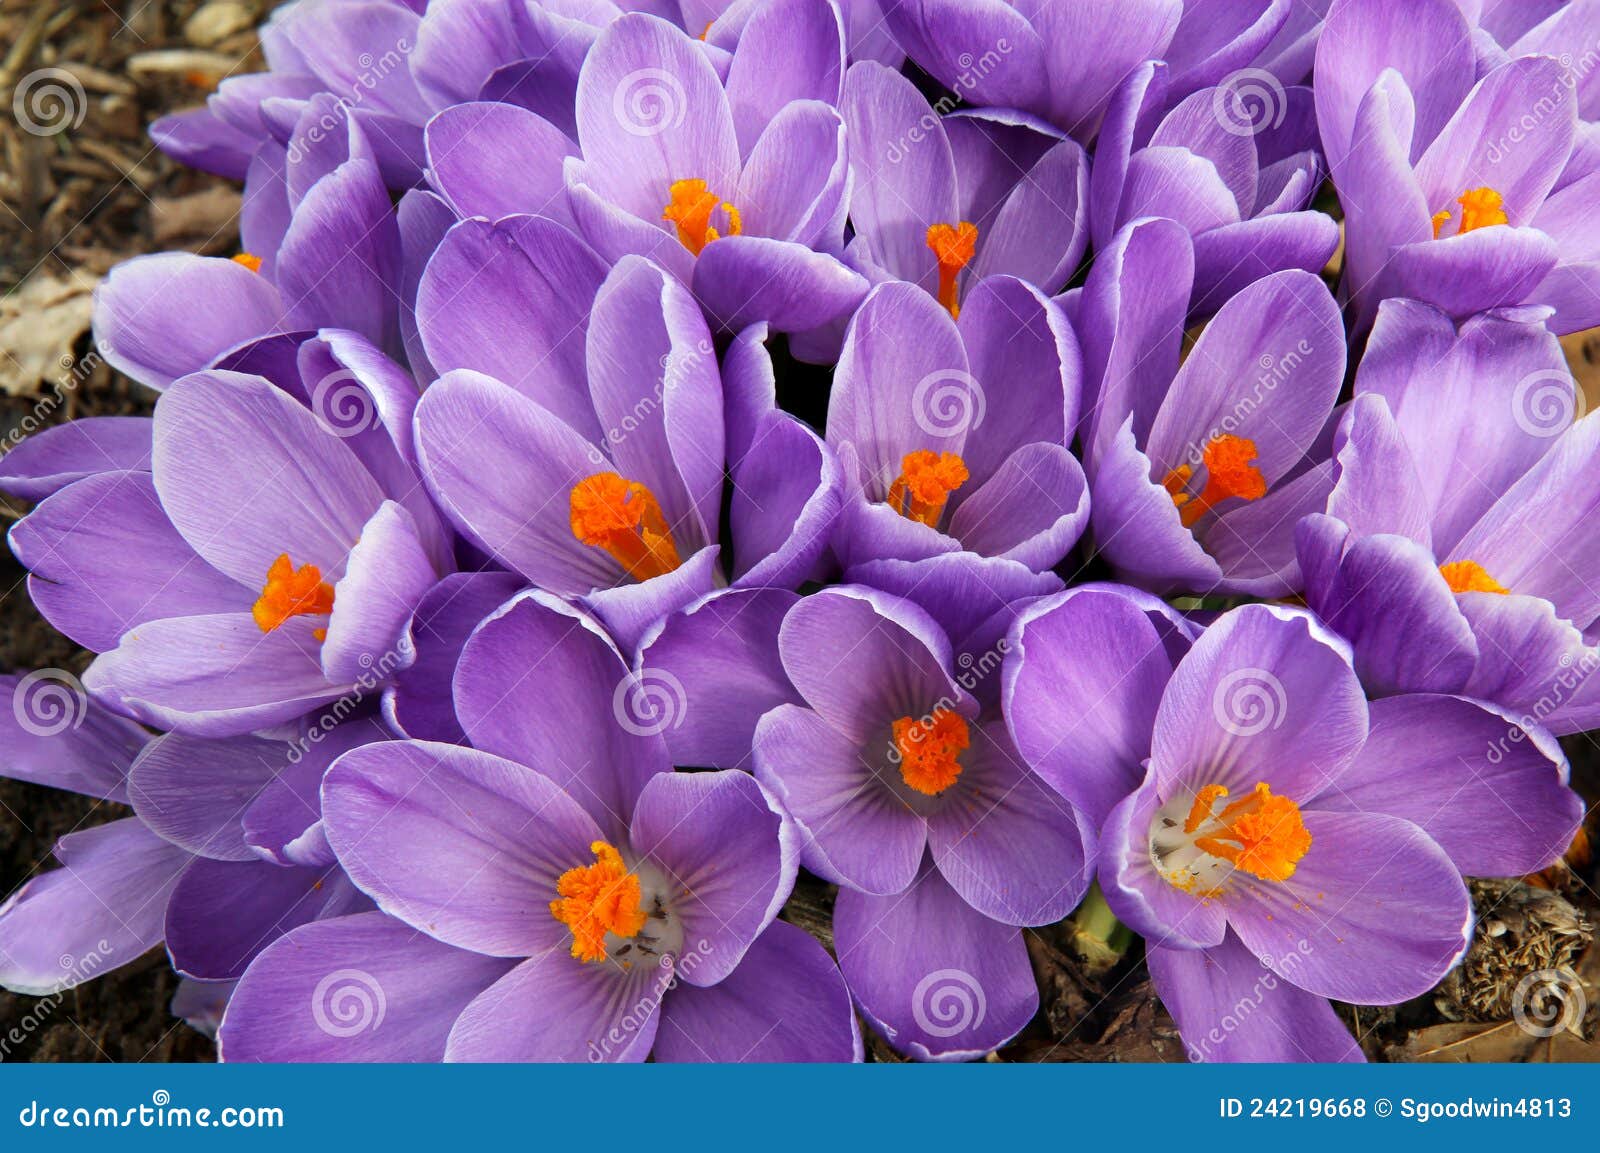 clump of purple crocus flowers